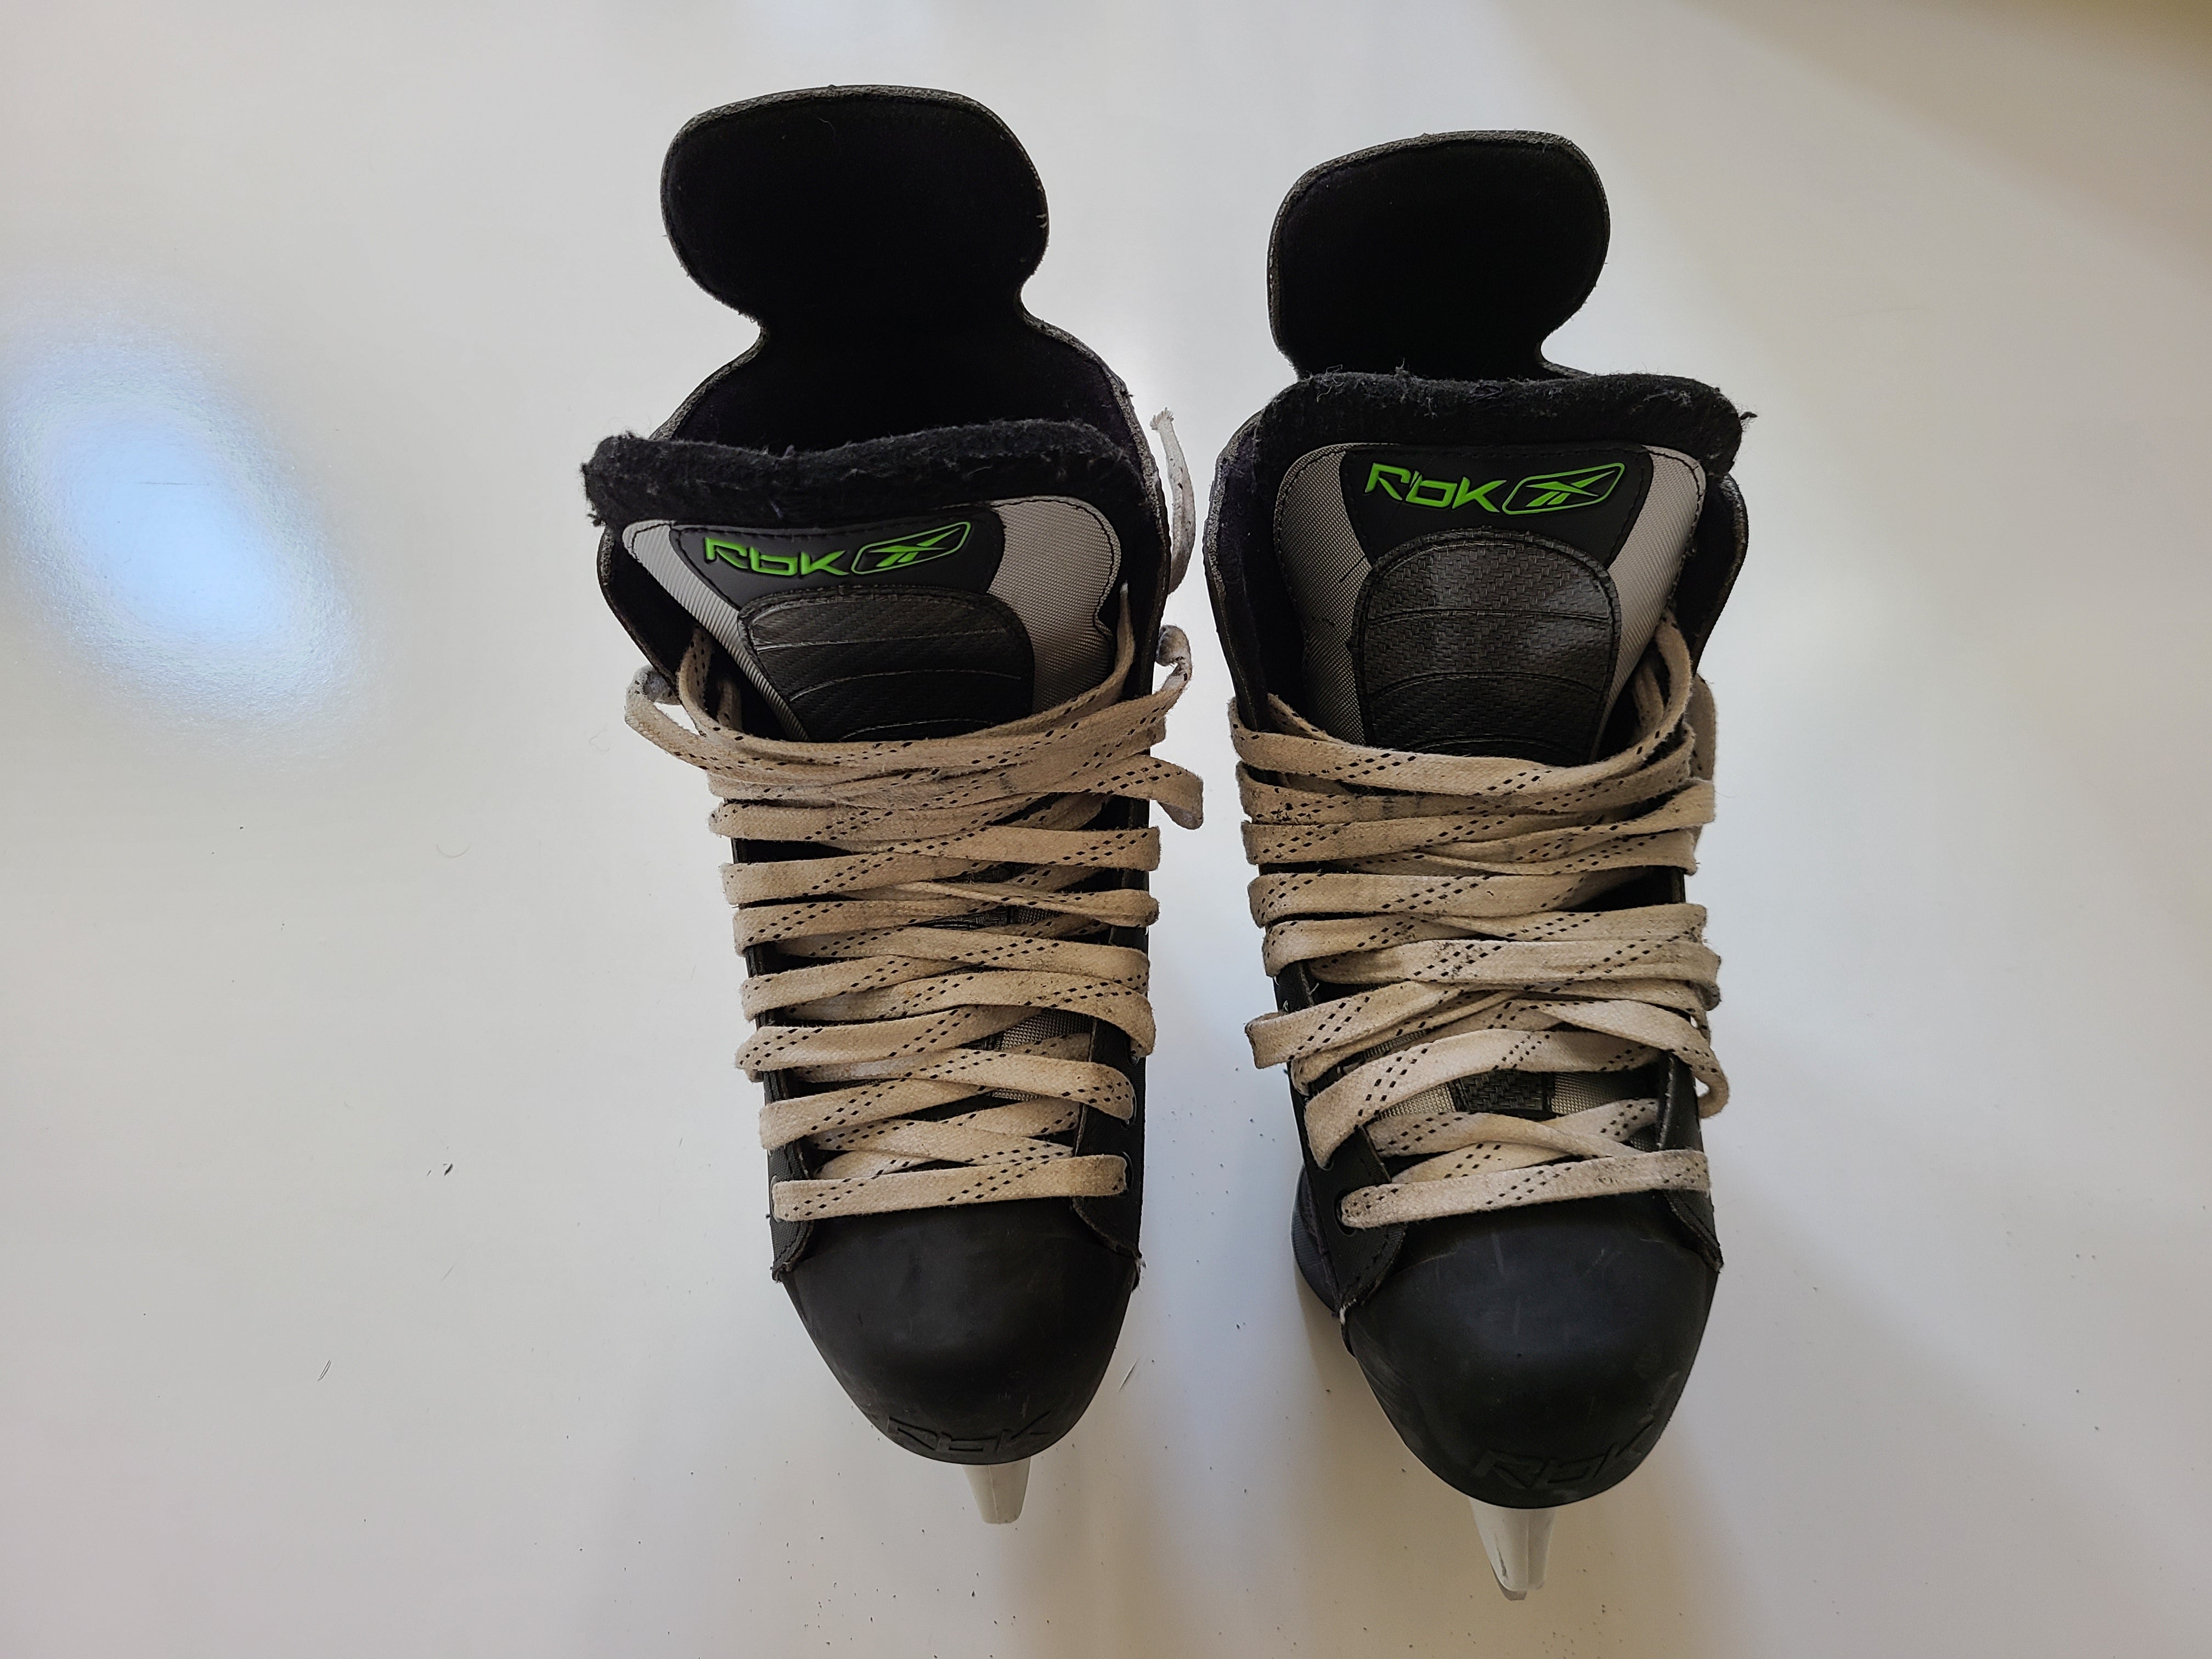 Reebok Pump 4K Hockey Skates, Size 7.5, very good condition